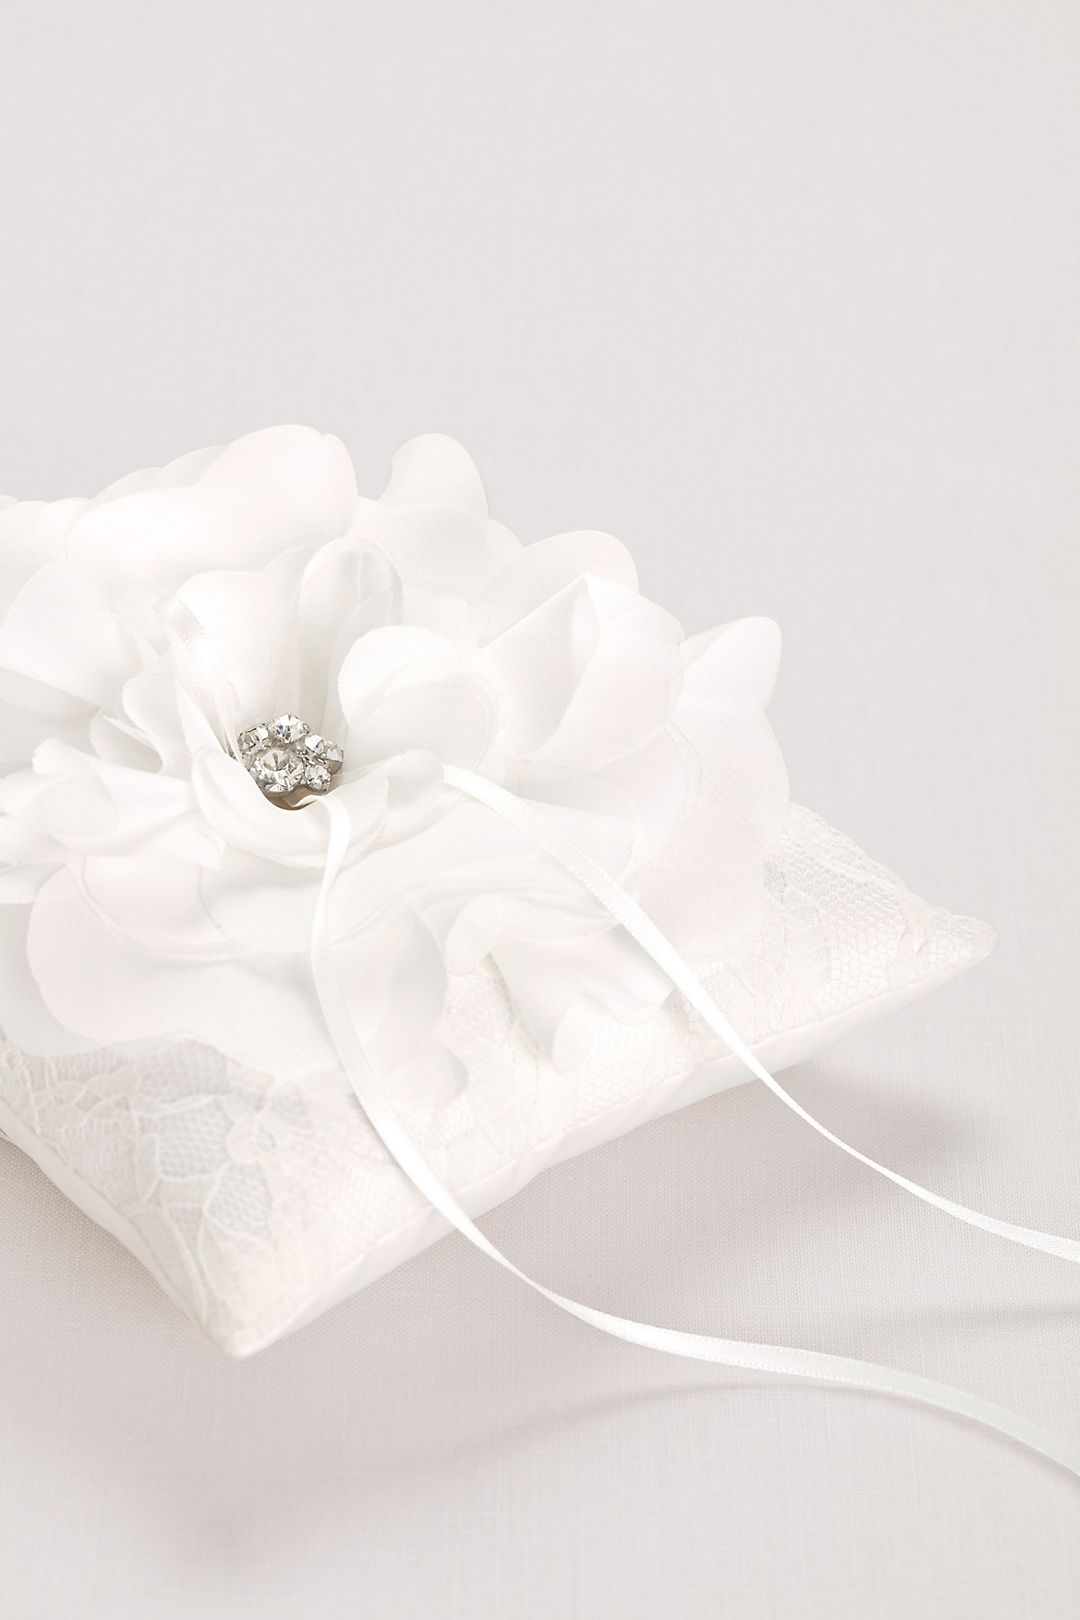 Layered Flower Ring Pillow Image 2